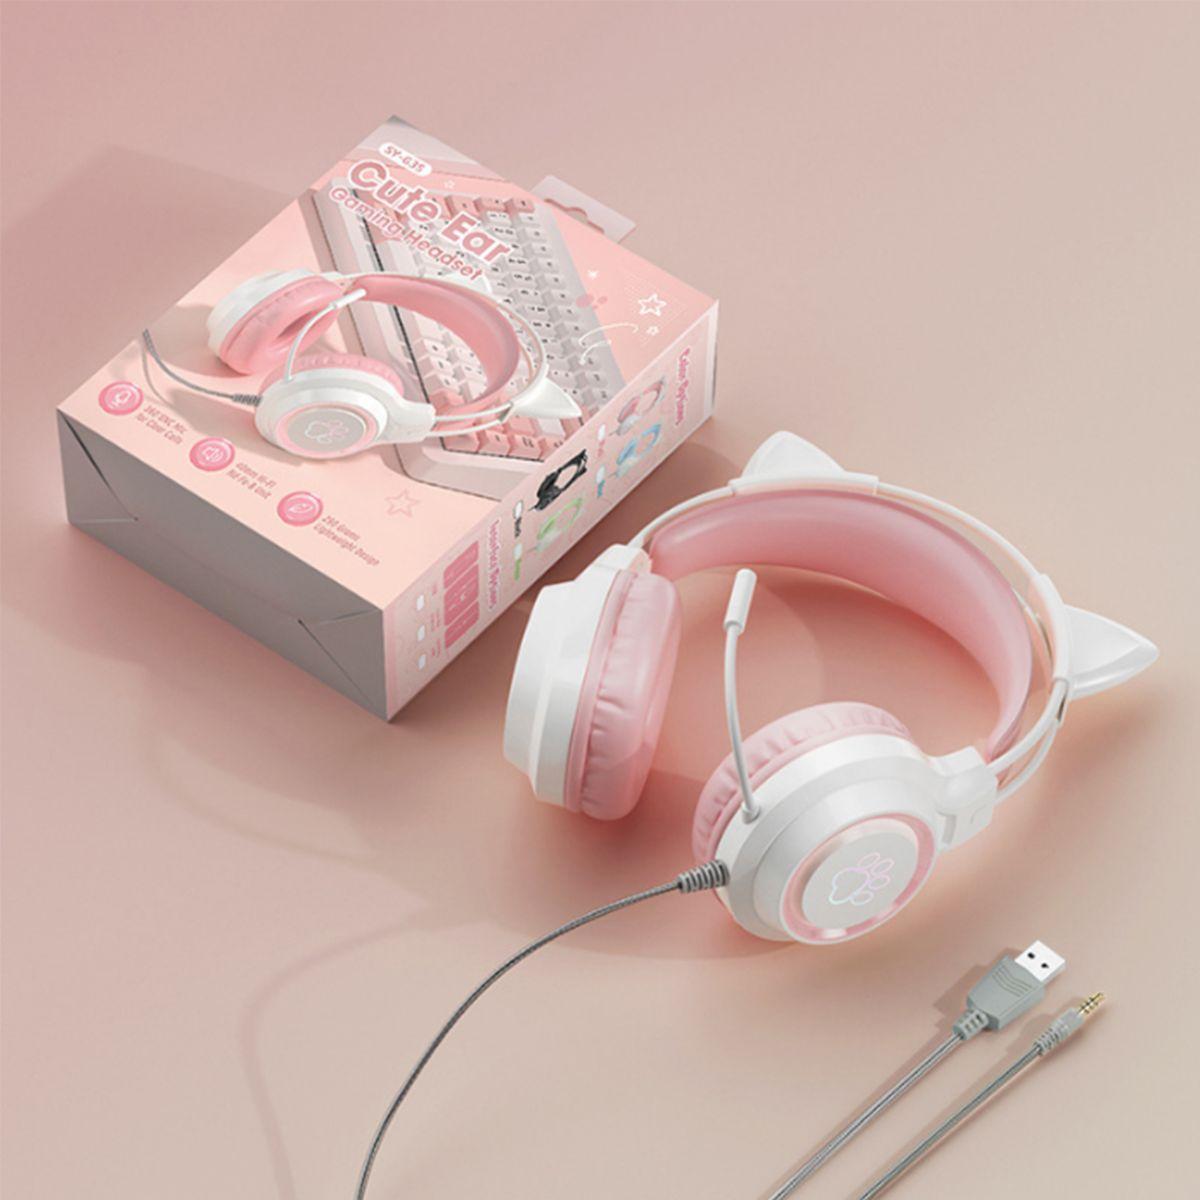 KINSI Headset,Gaming-Headset mit Katzenohren,Geräuschunterdrückung Over-Ear-Kopfhörer, Over-ear rosa Kopfhörer